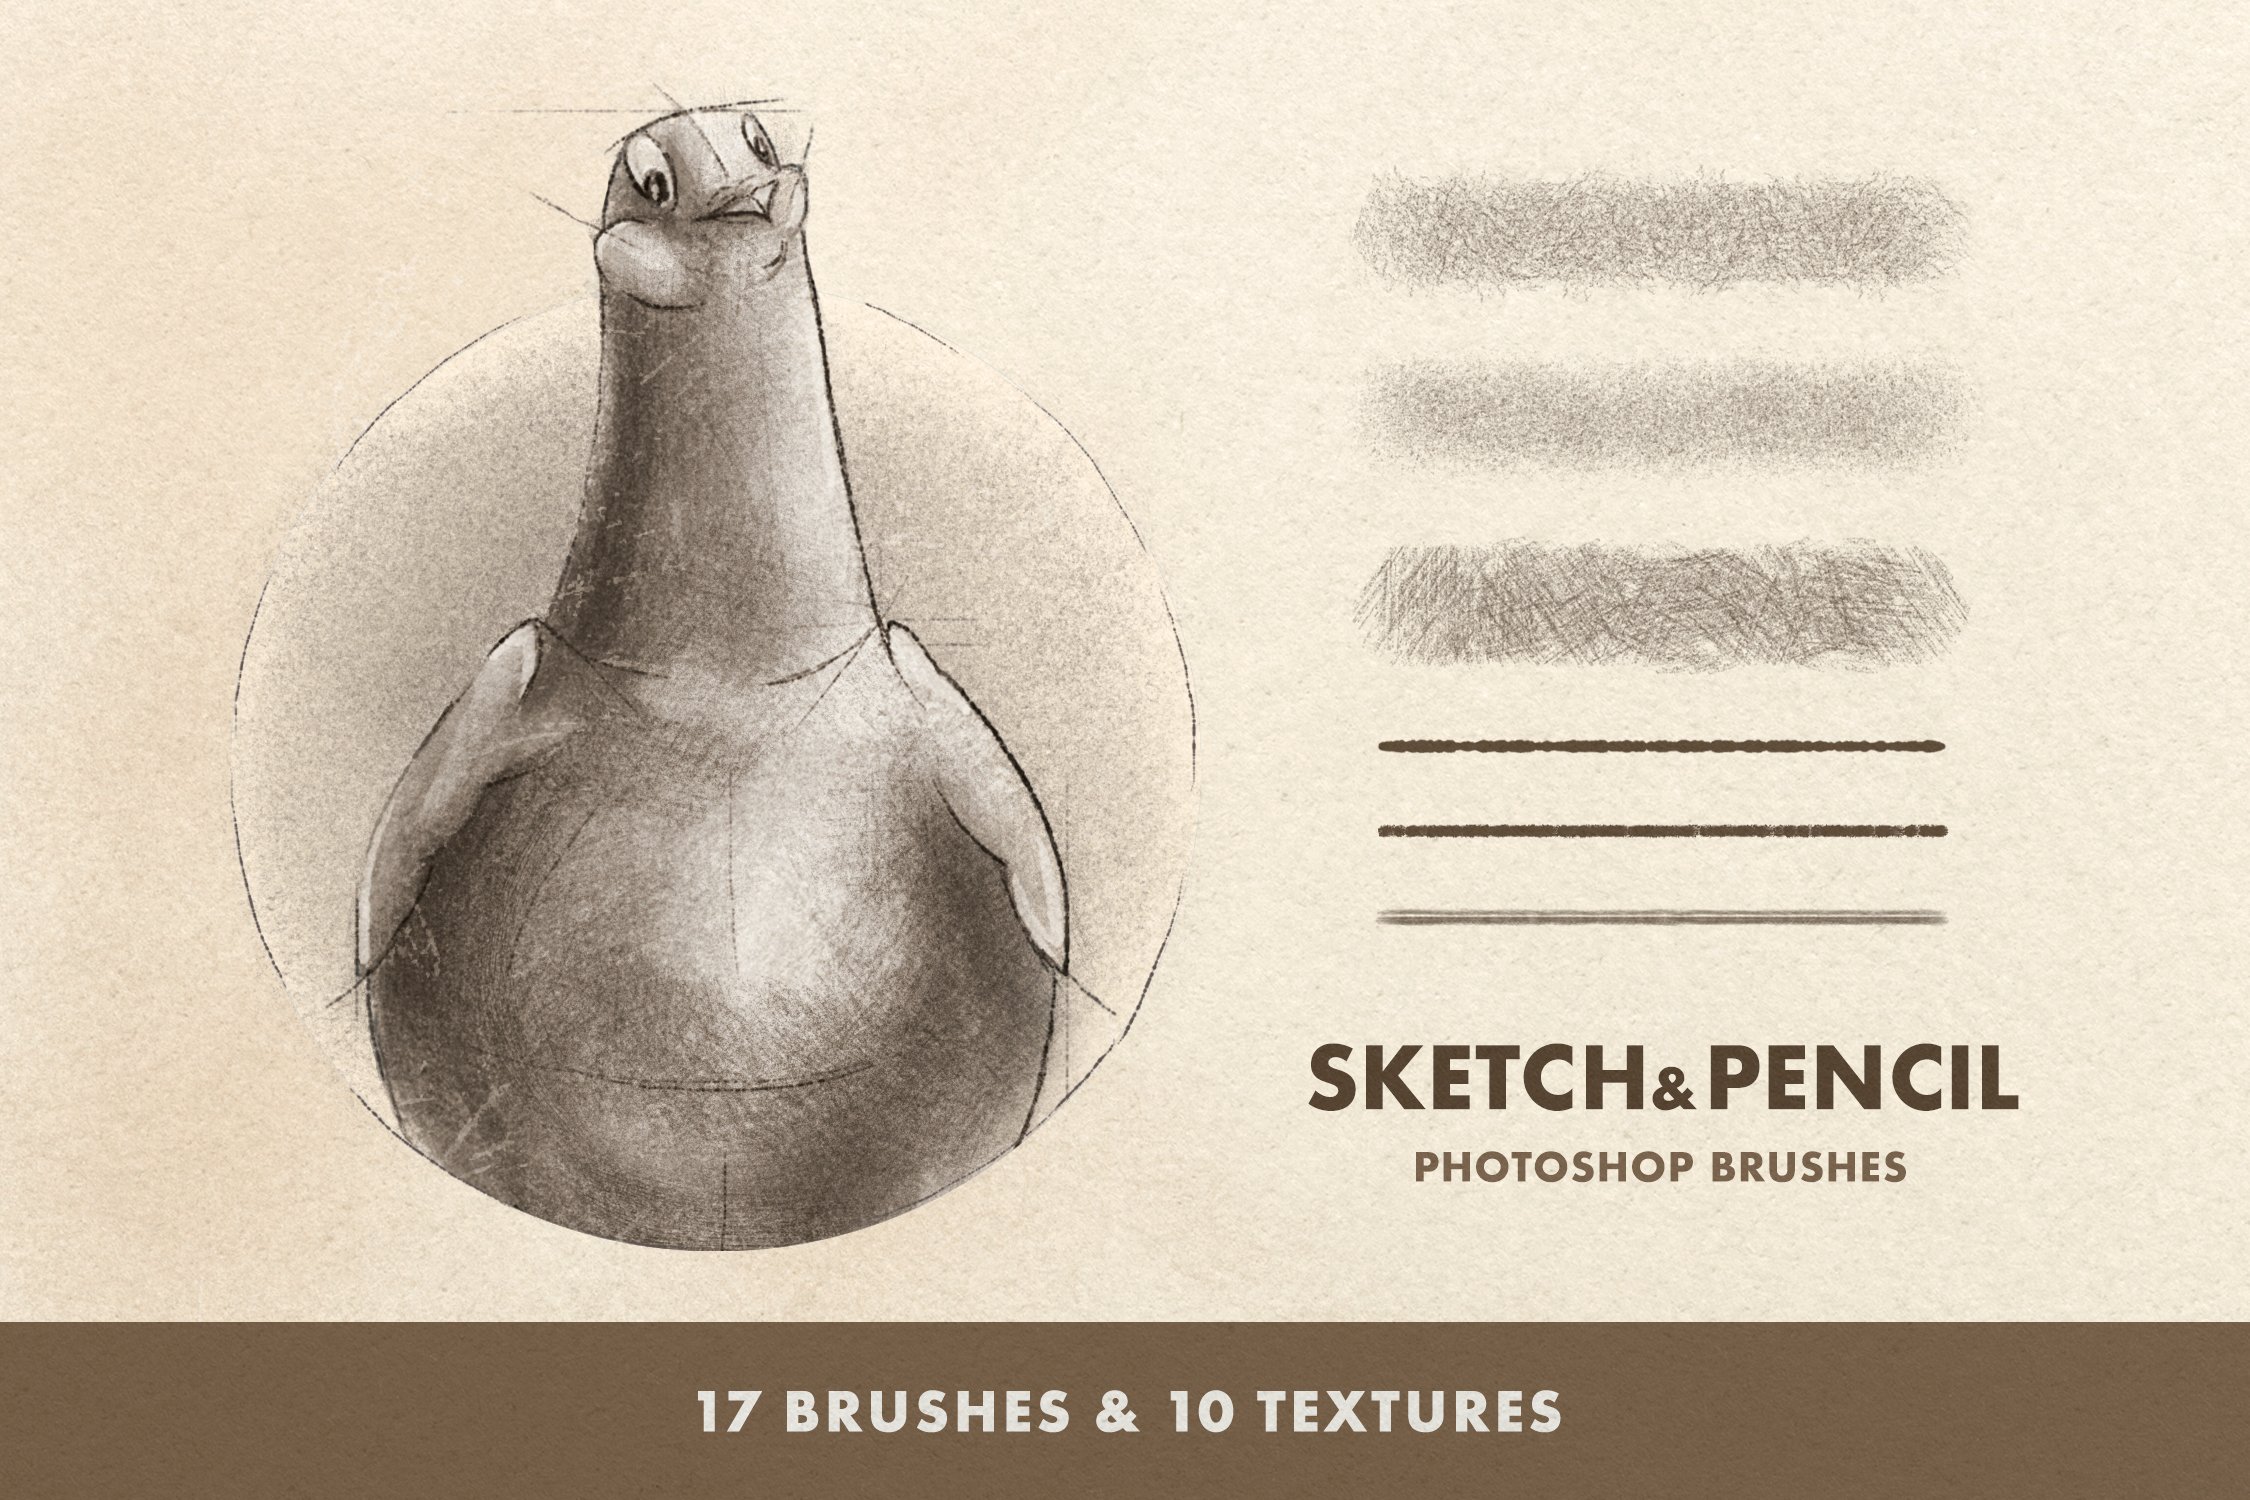 Sketch & Pencil Photoshop Brushescover image.